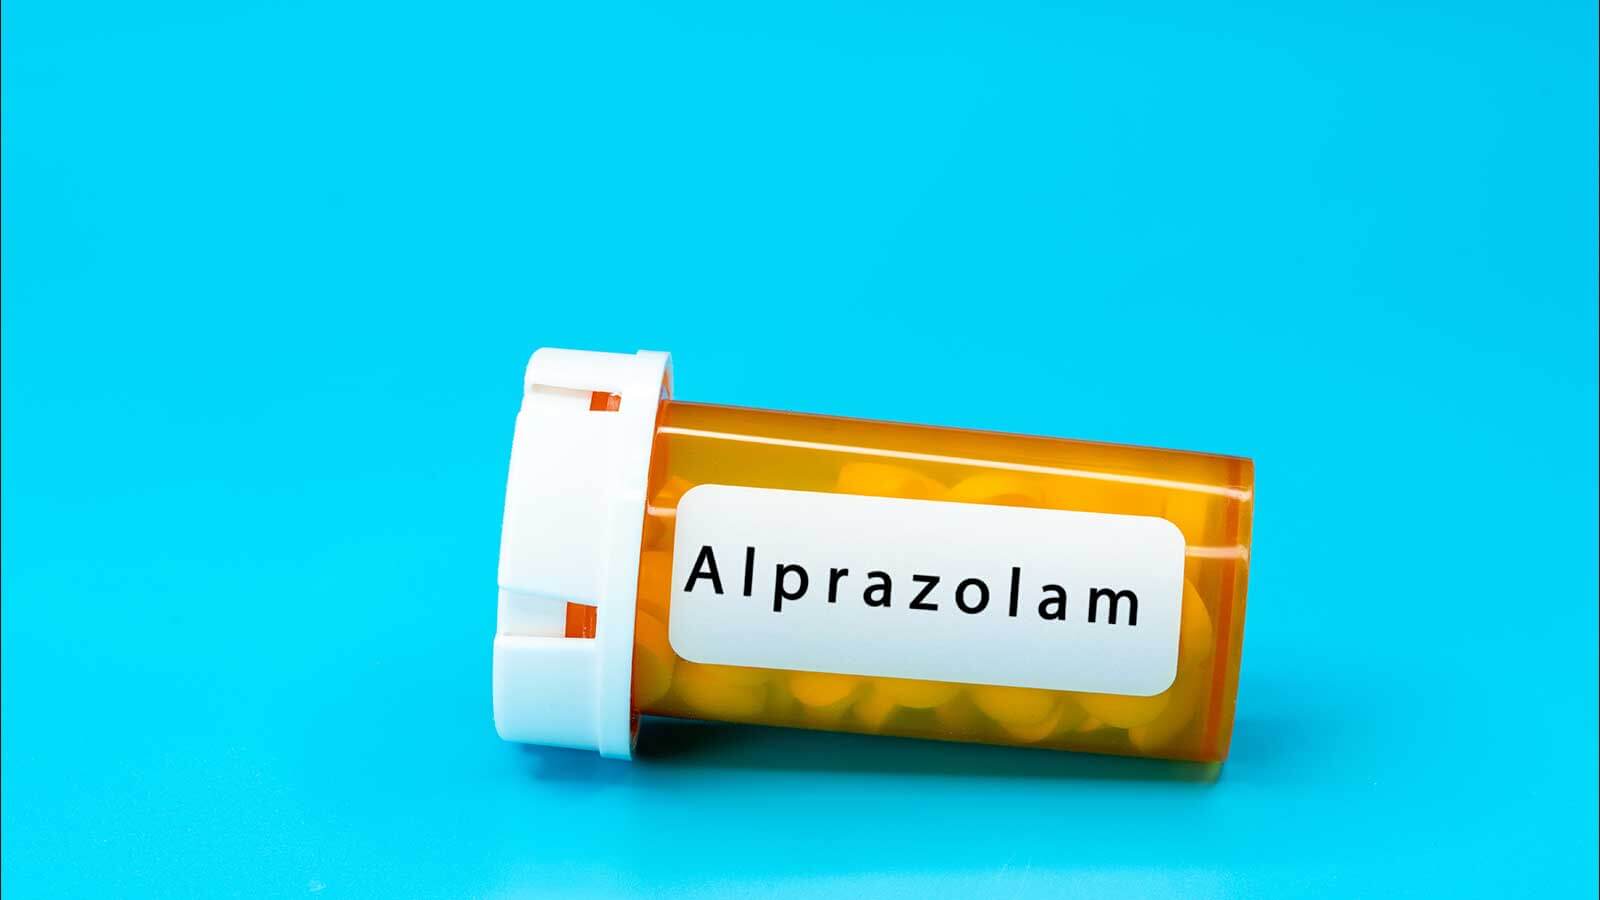 alprazolam tablets